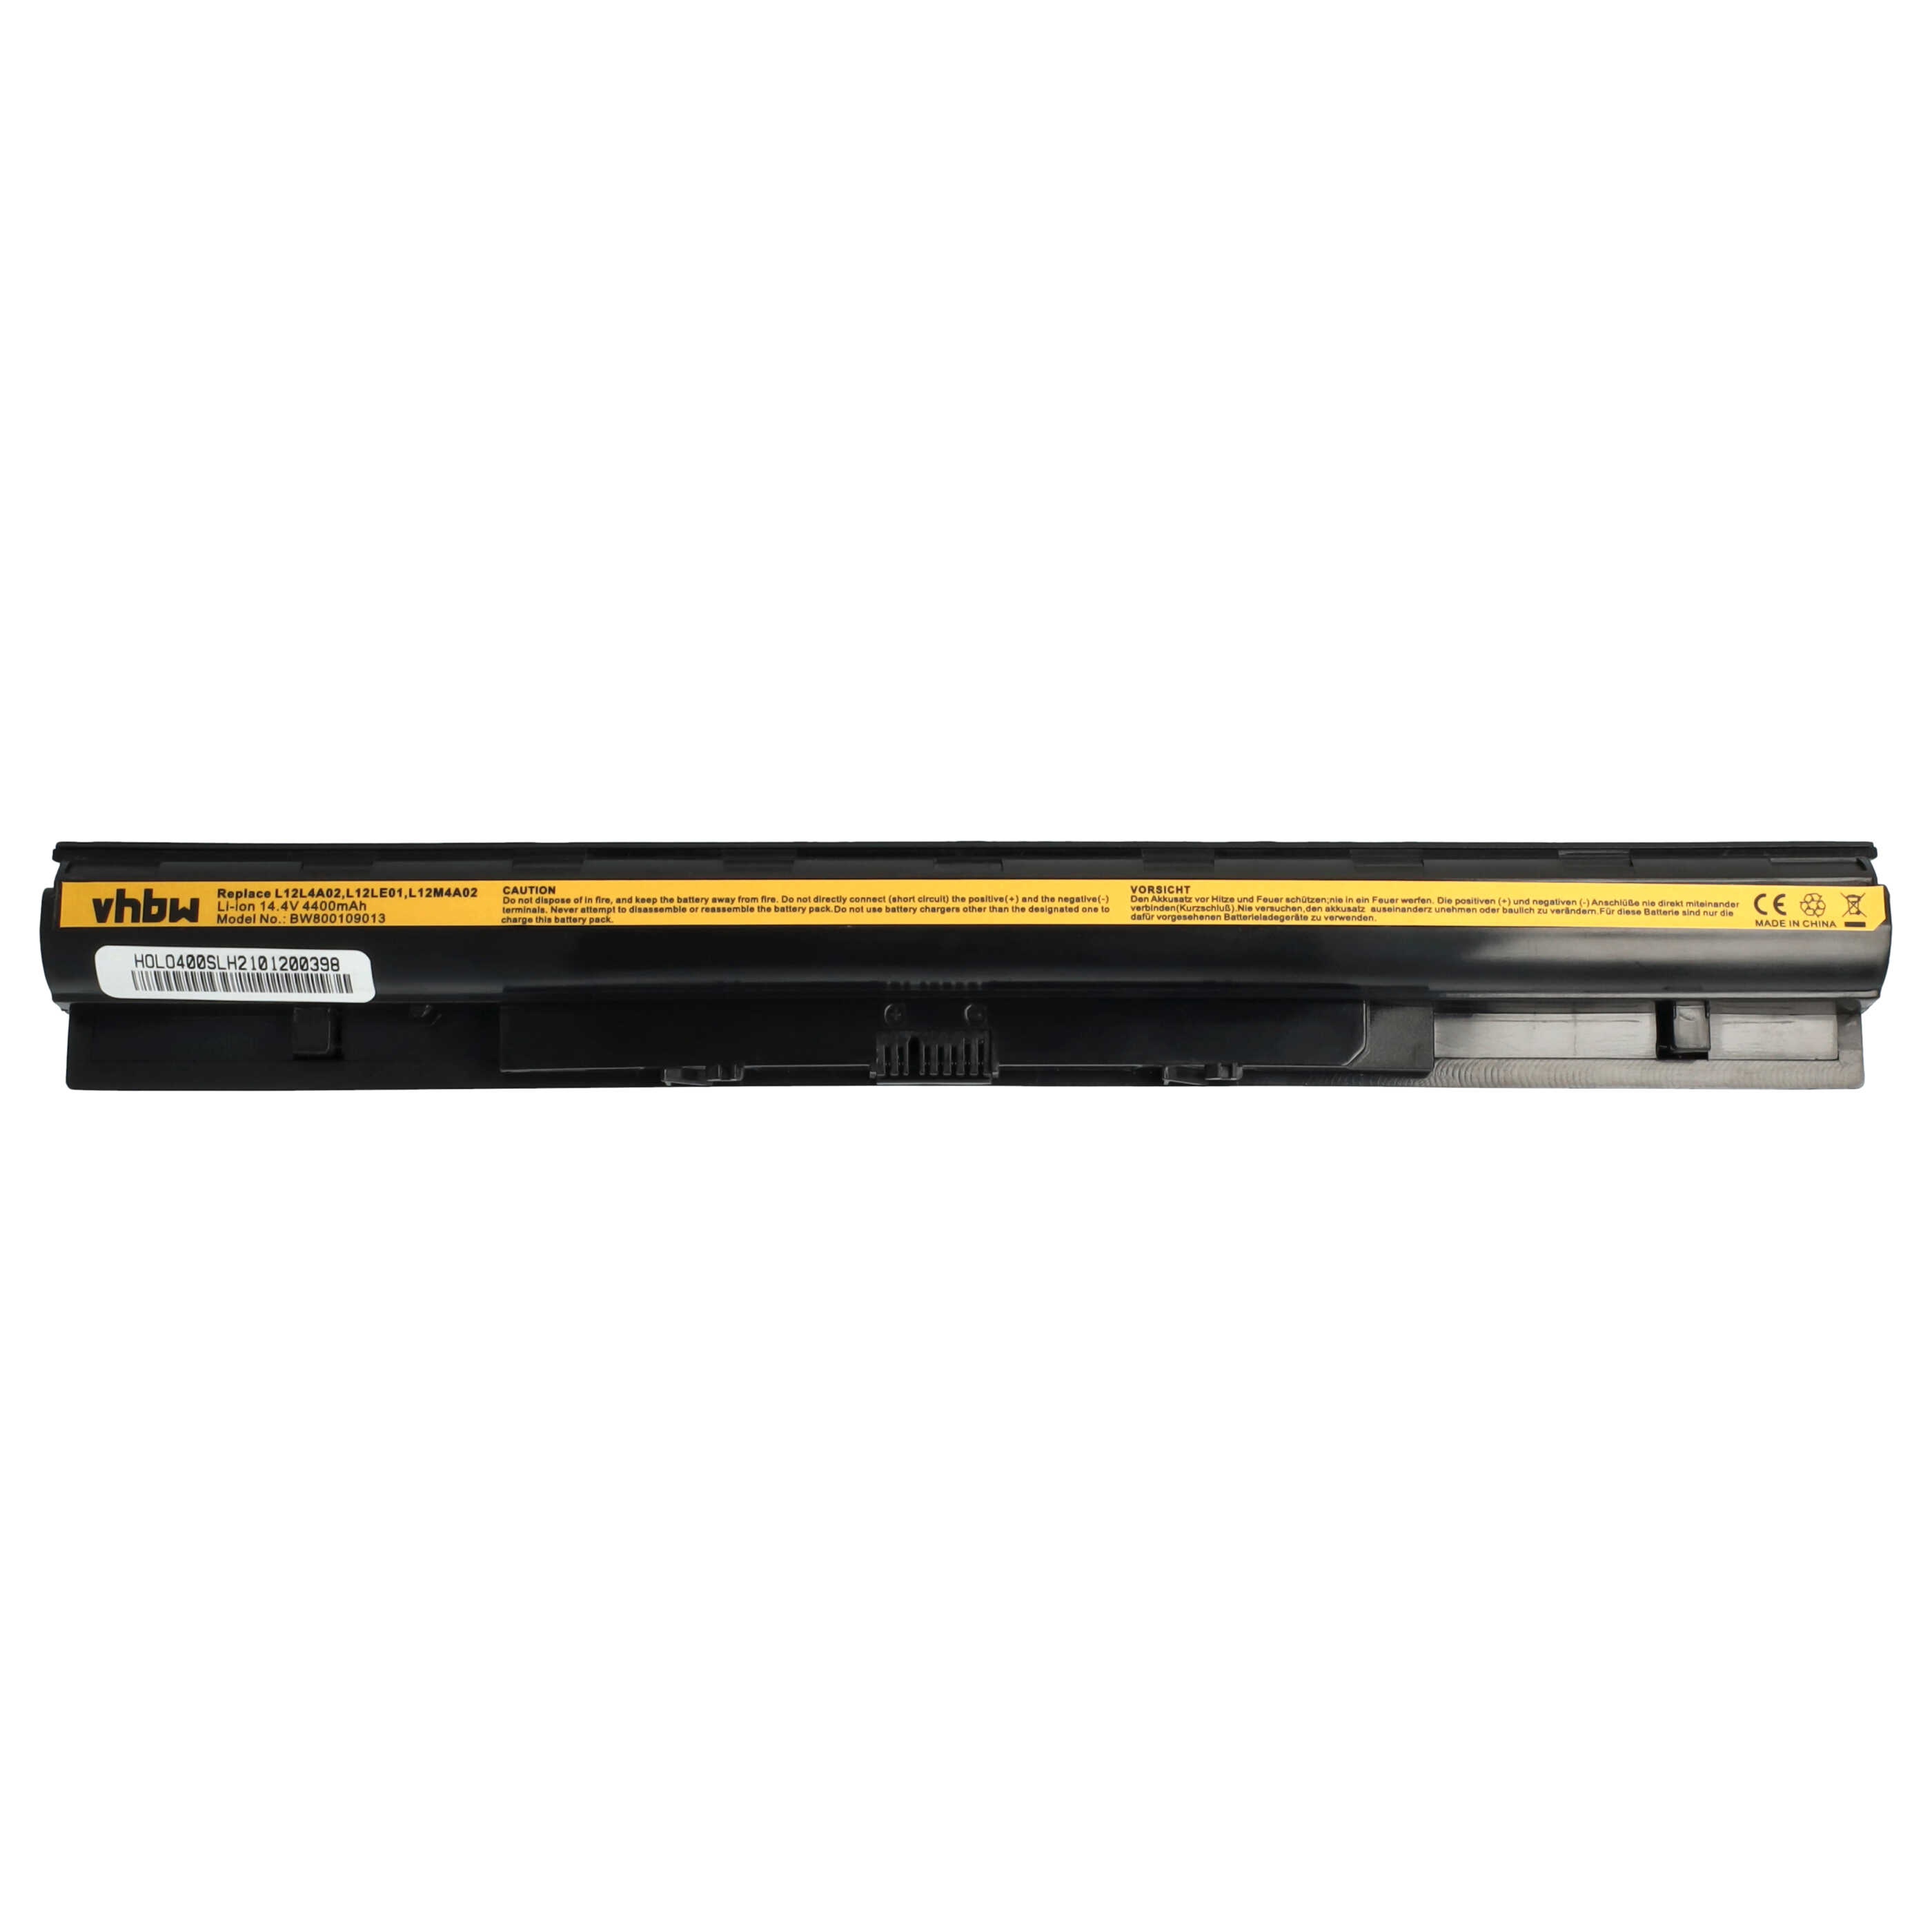 Batería reemplaza Lenovo 121500171, 121500172, 121500173 para notebook Lenovo - 4400 mAh 14,8 V Li-Ion negro